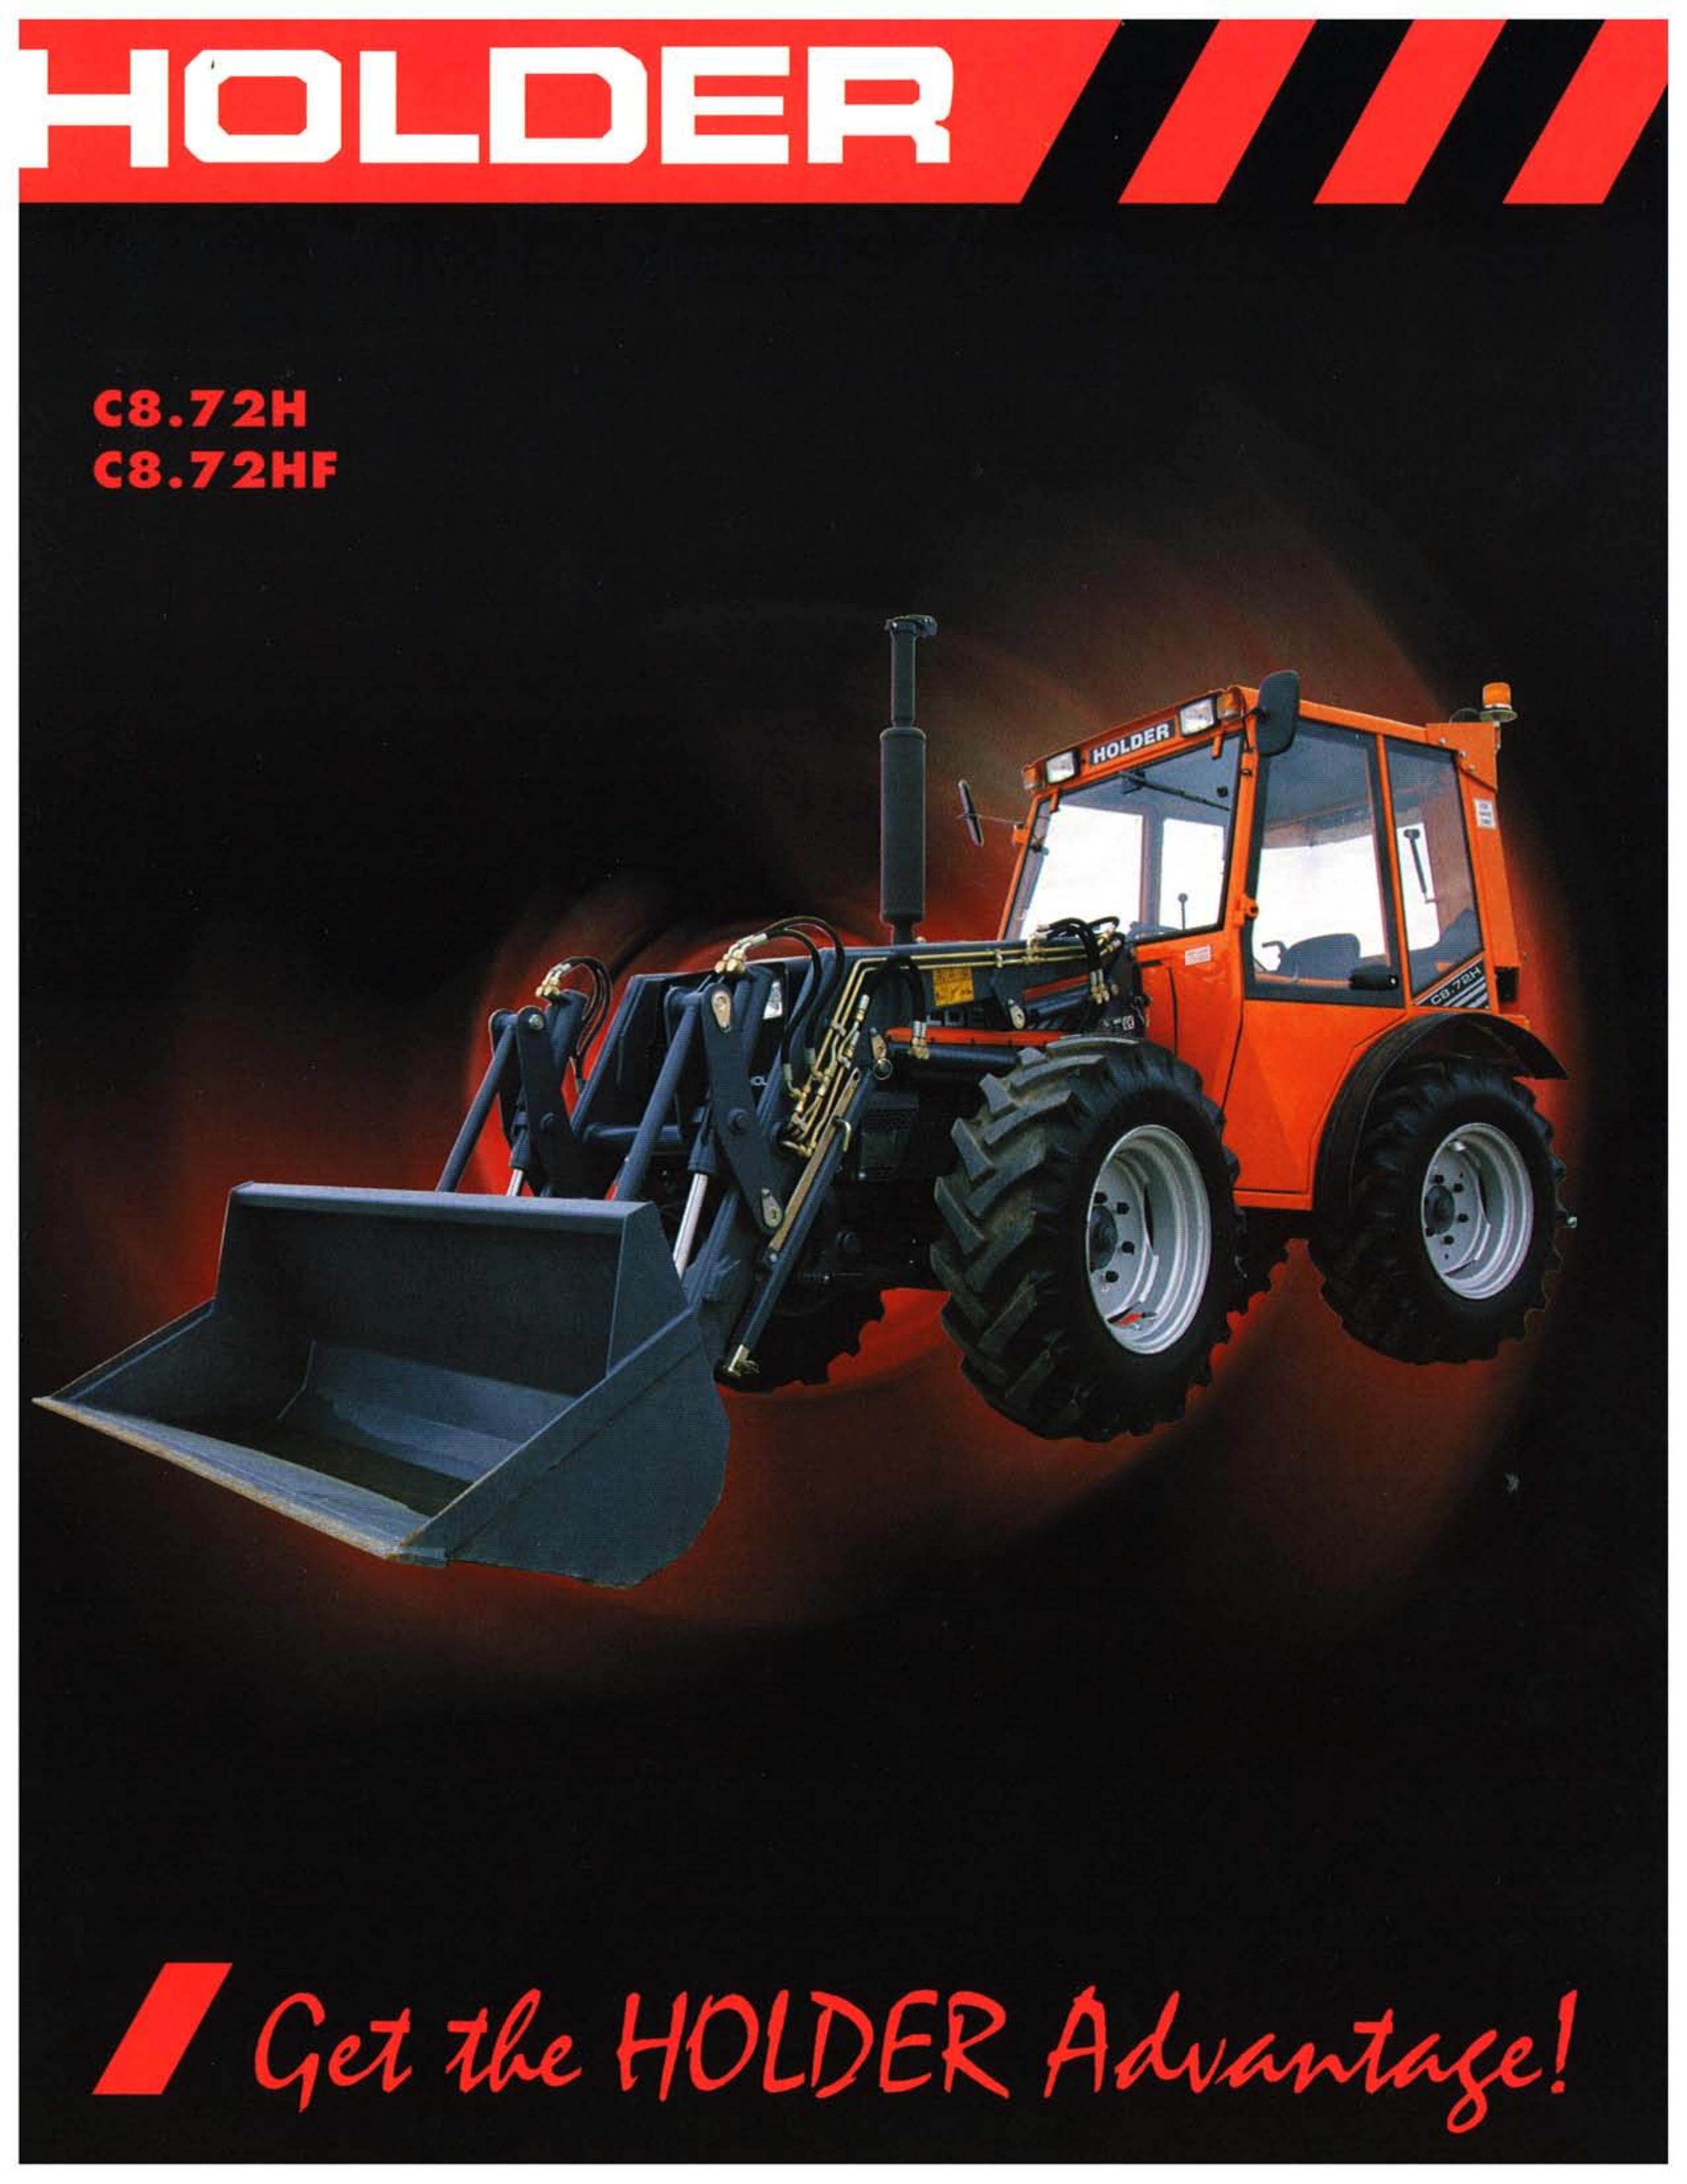 Holder C8.72HF Lawn Mower User Manual